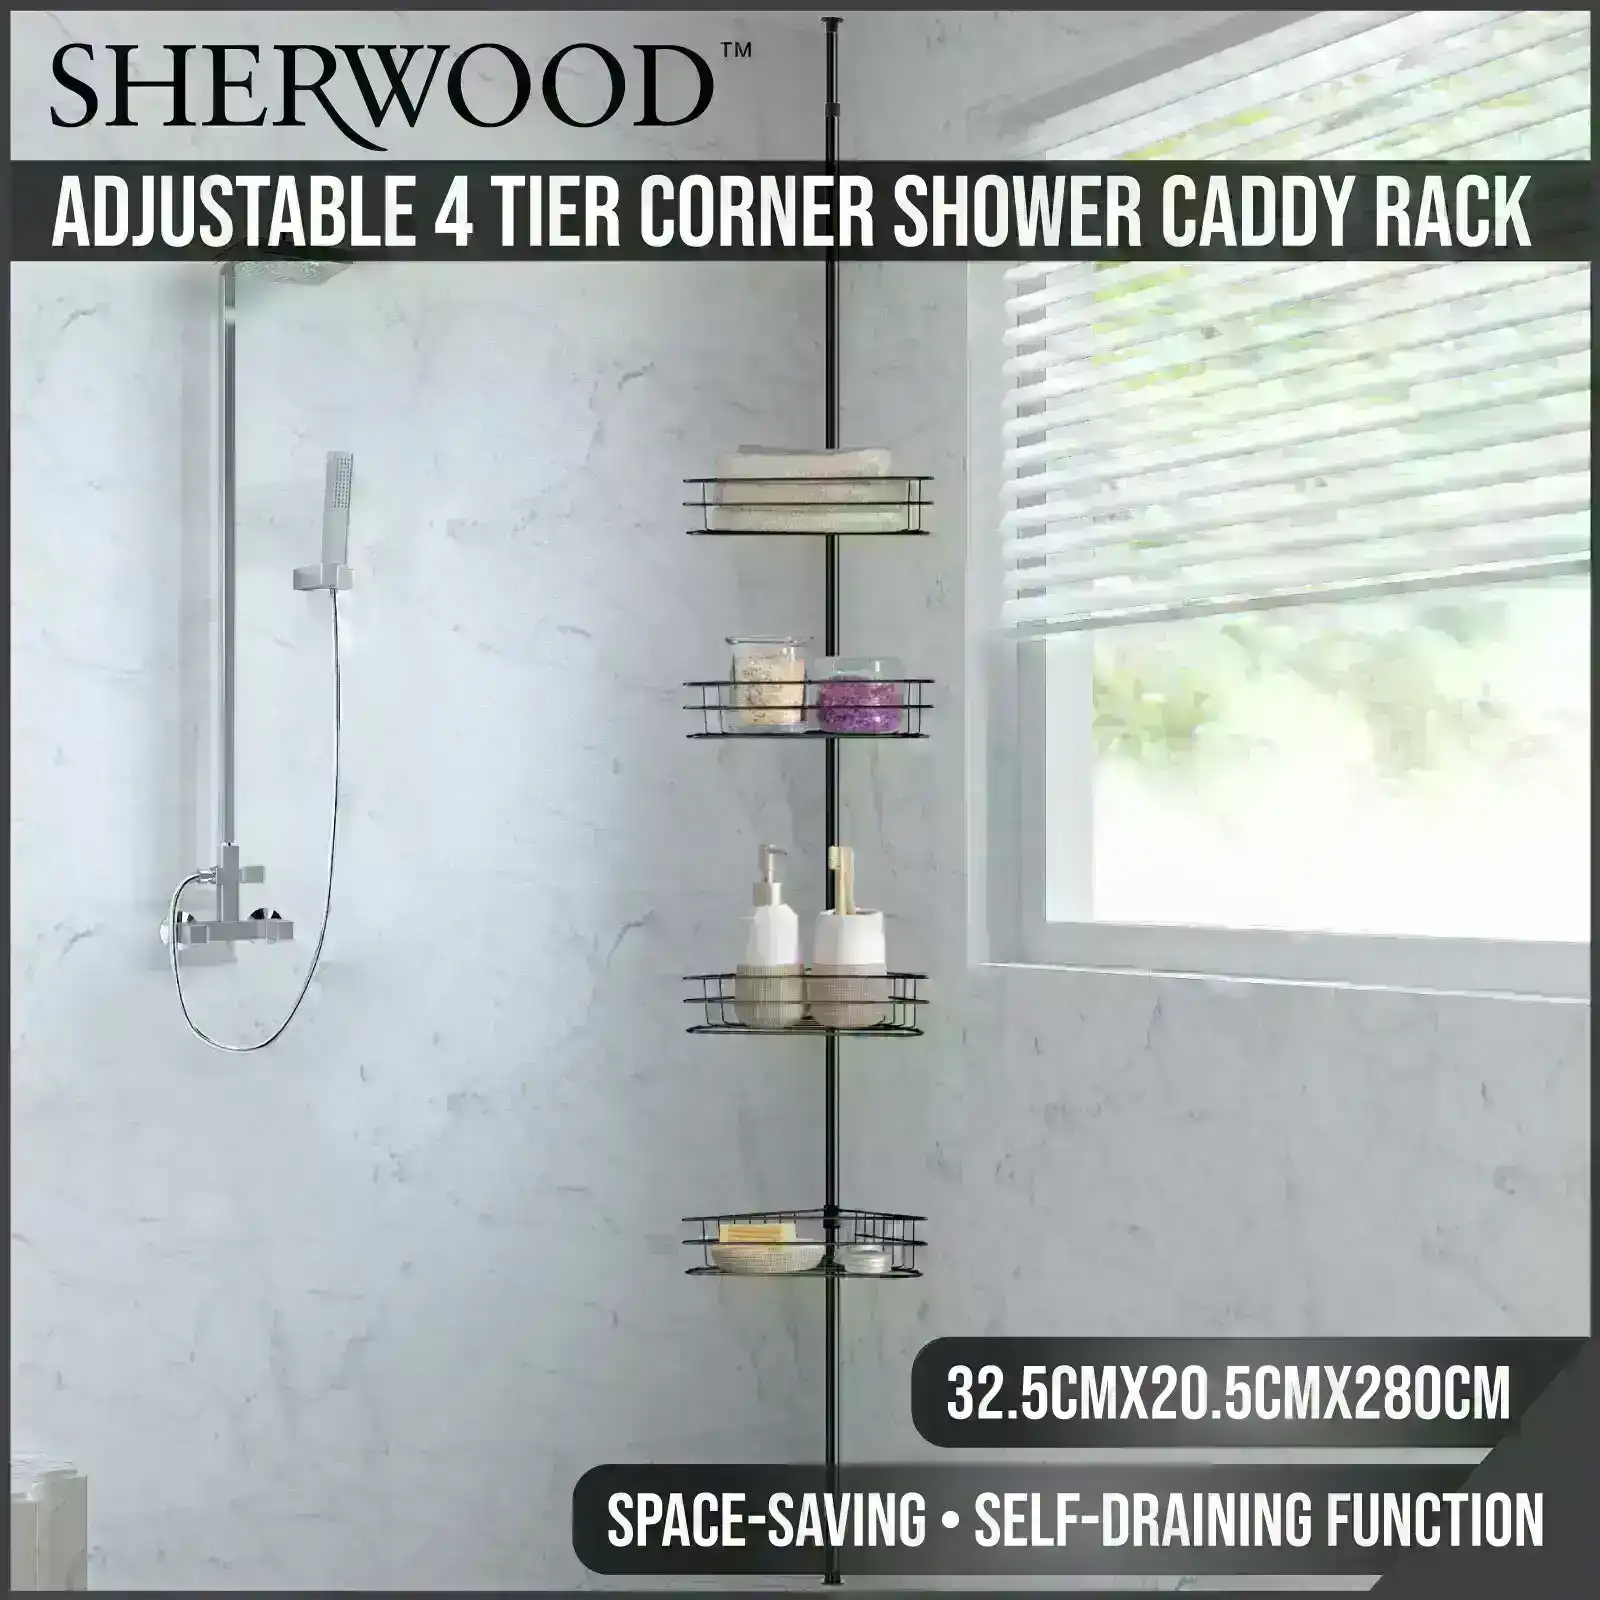 Sherwood Home Adjustable Telescopic 4 Tier Corner Shower Caddy Rack Black